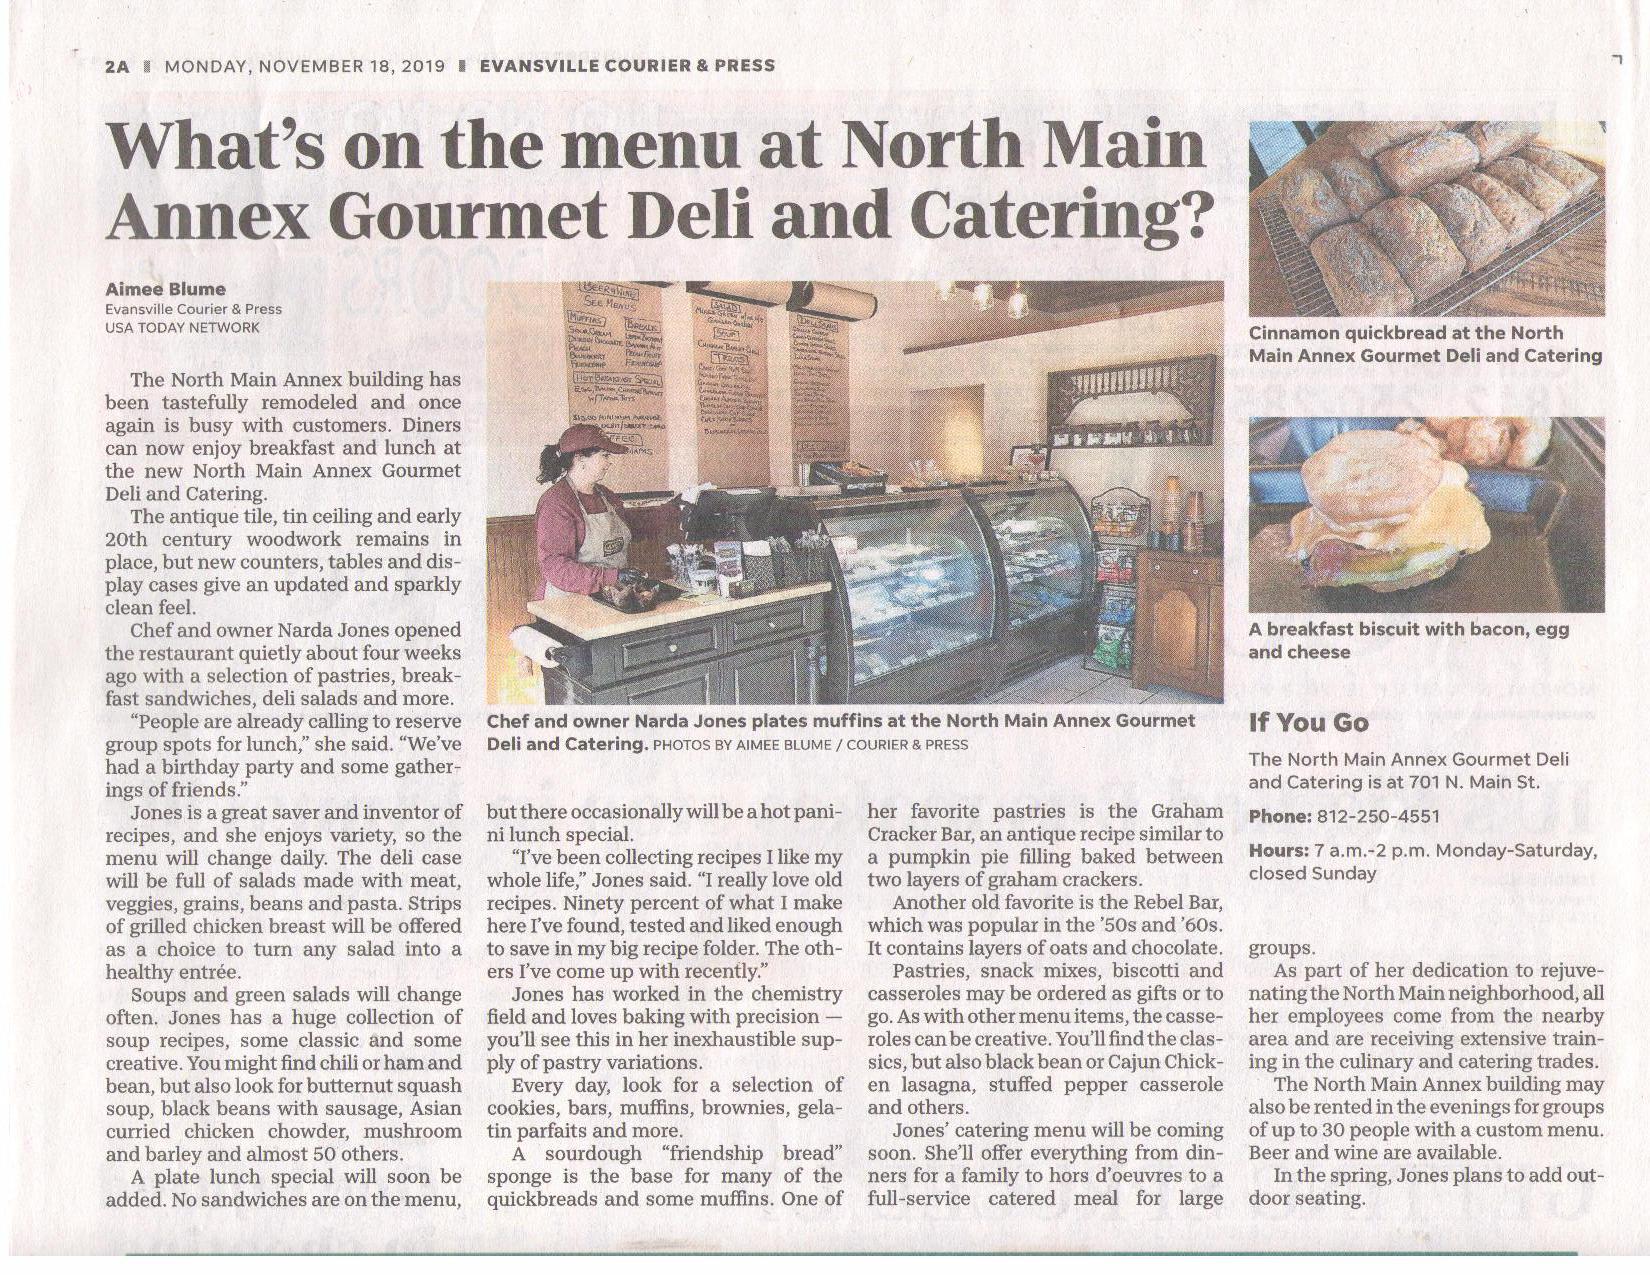 North Main Annex Gourmet Catering & Deli Photo